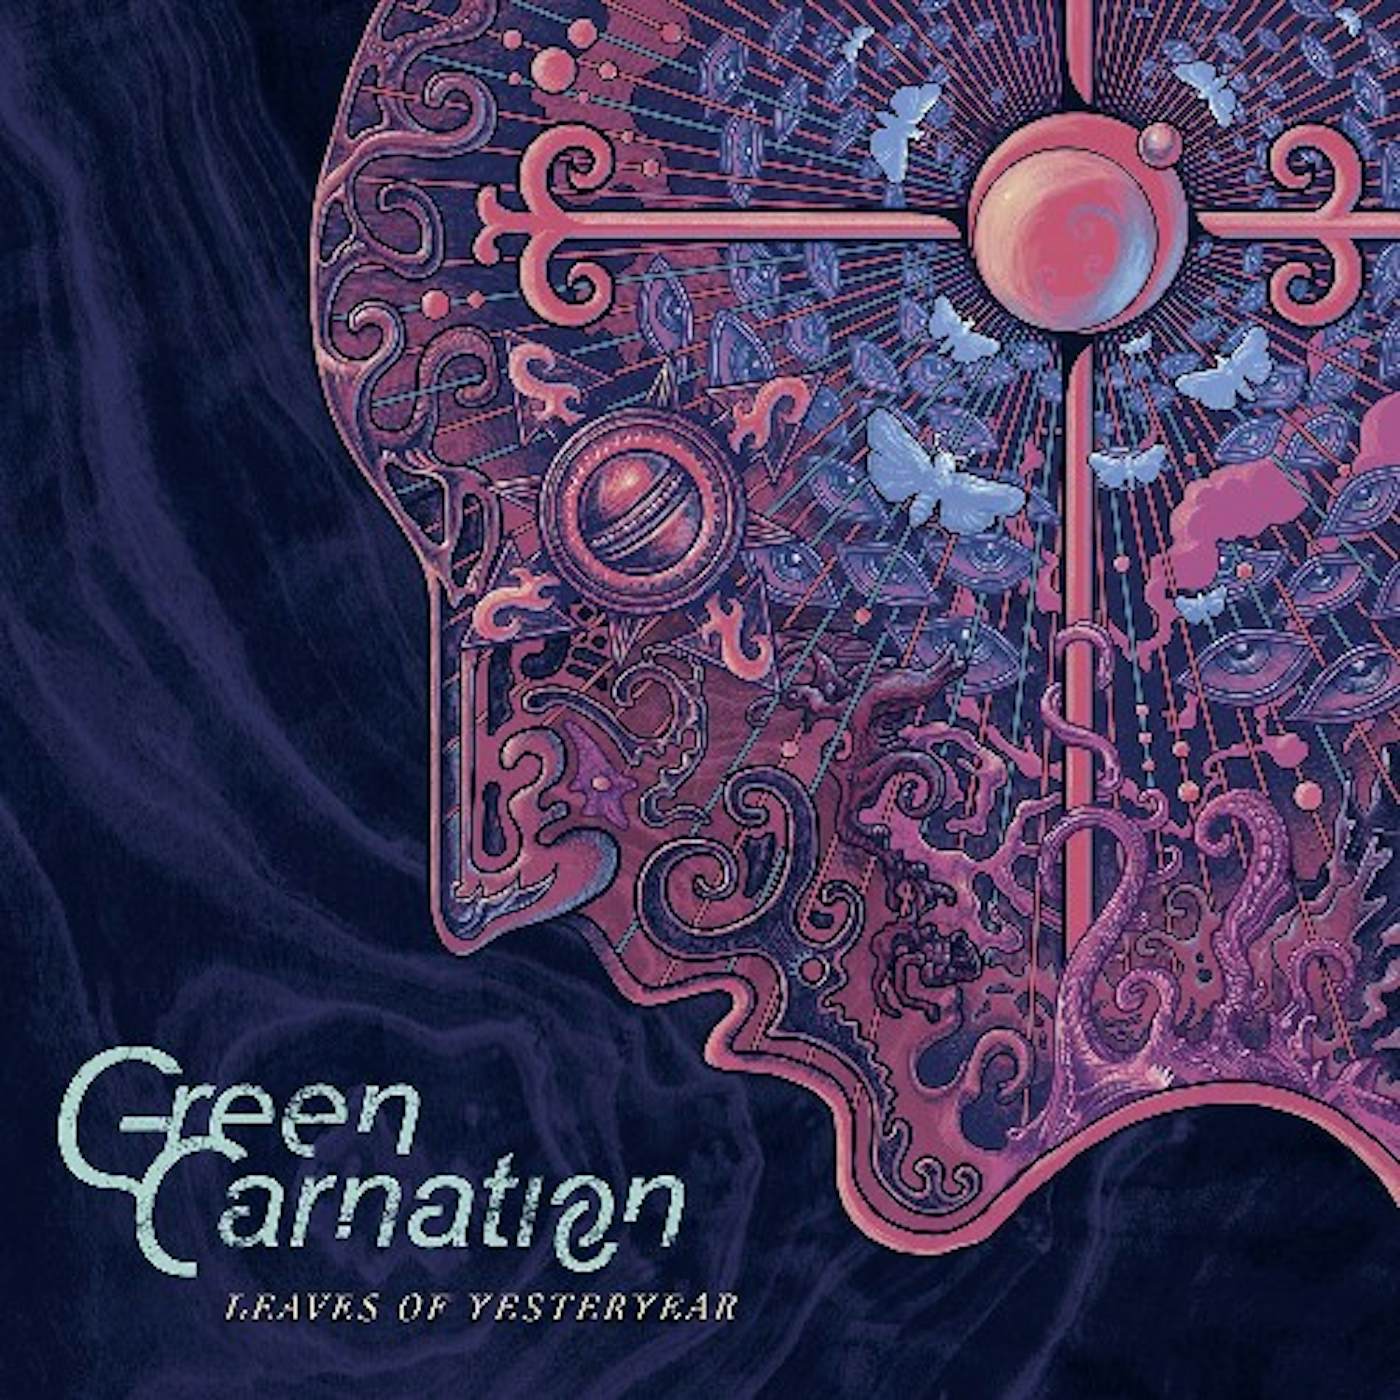 Green Carnation Leaves Of Yesteryear Vinyl Record